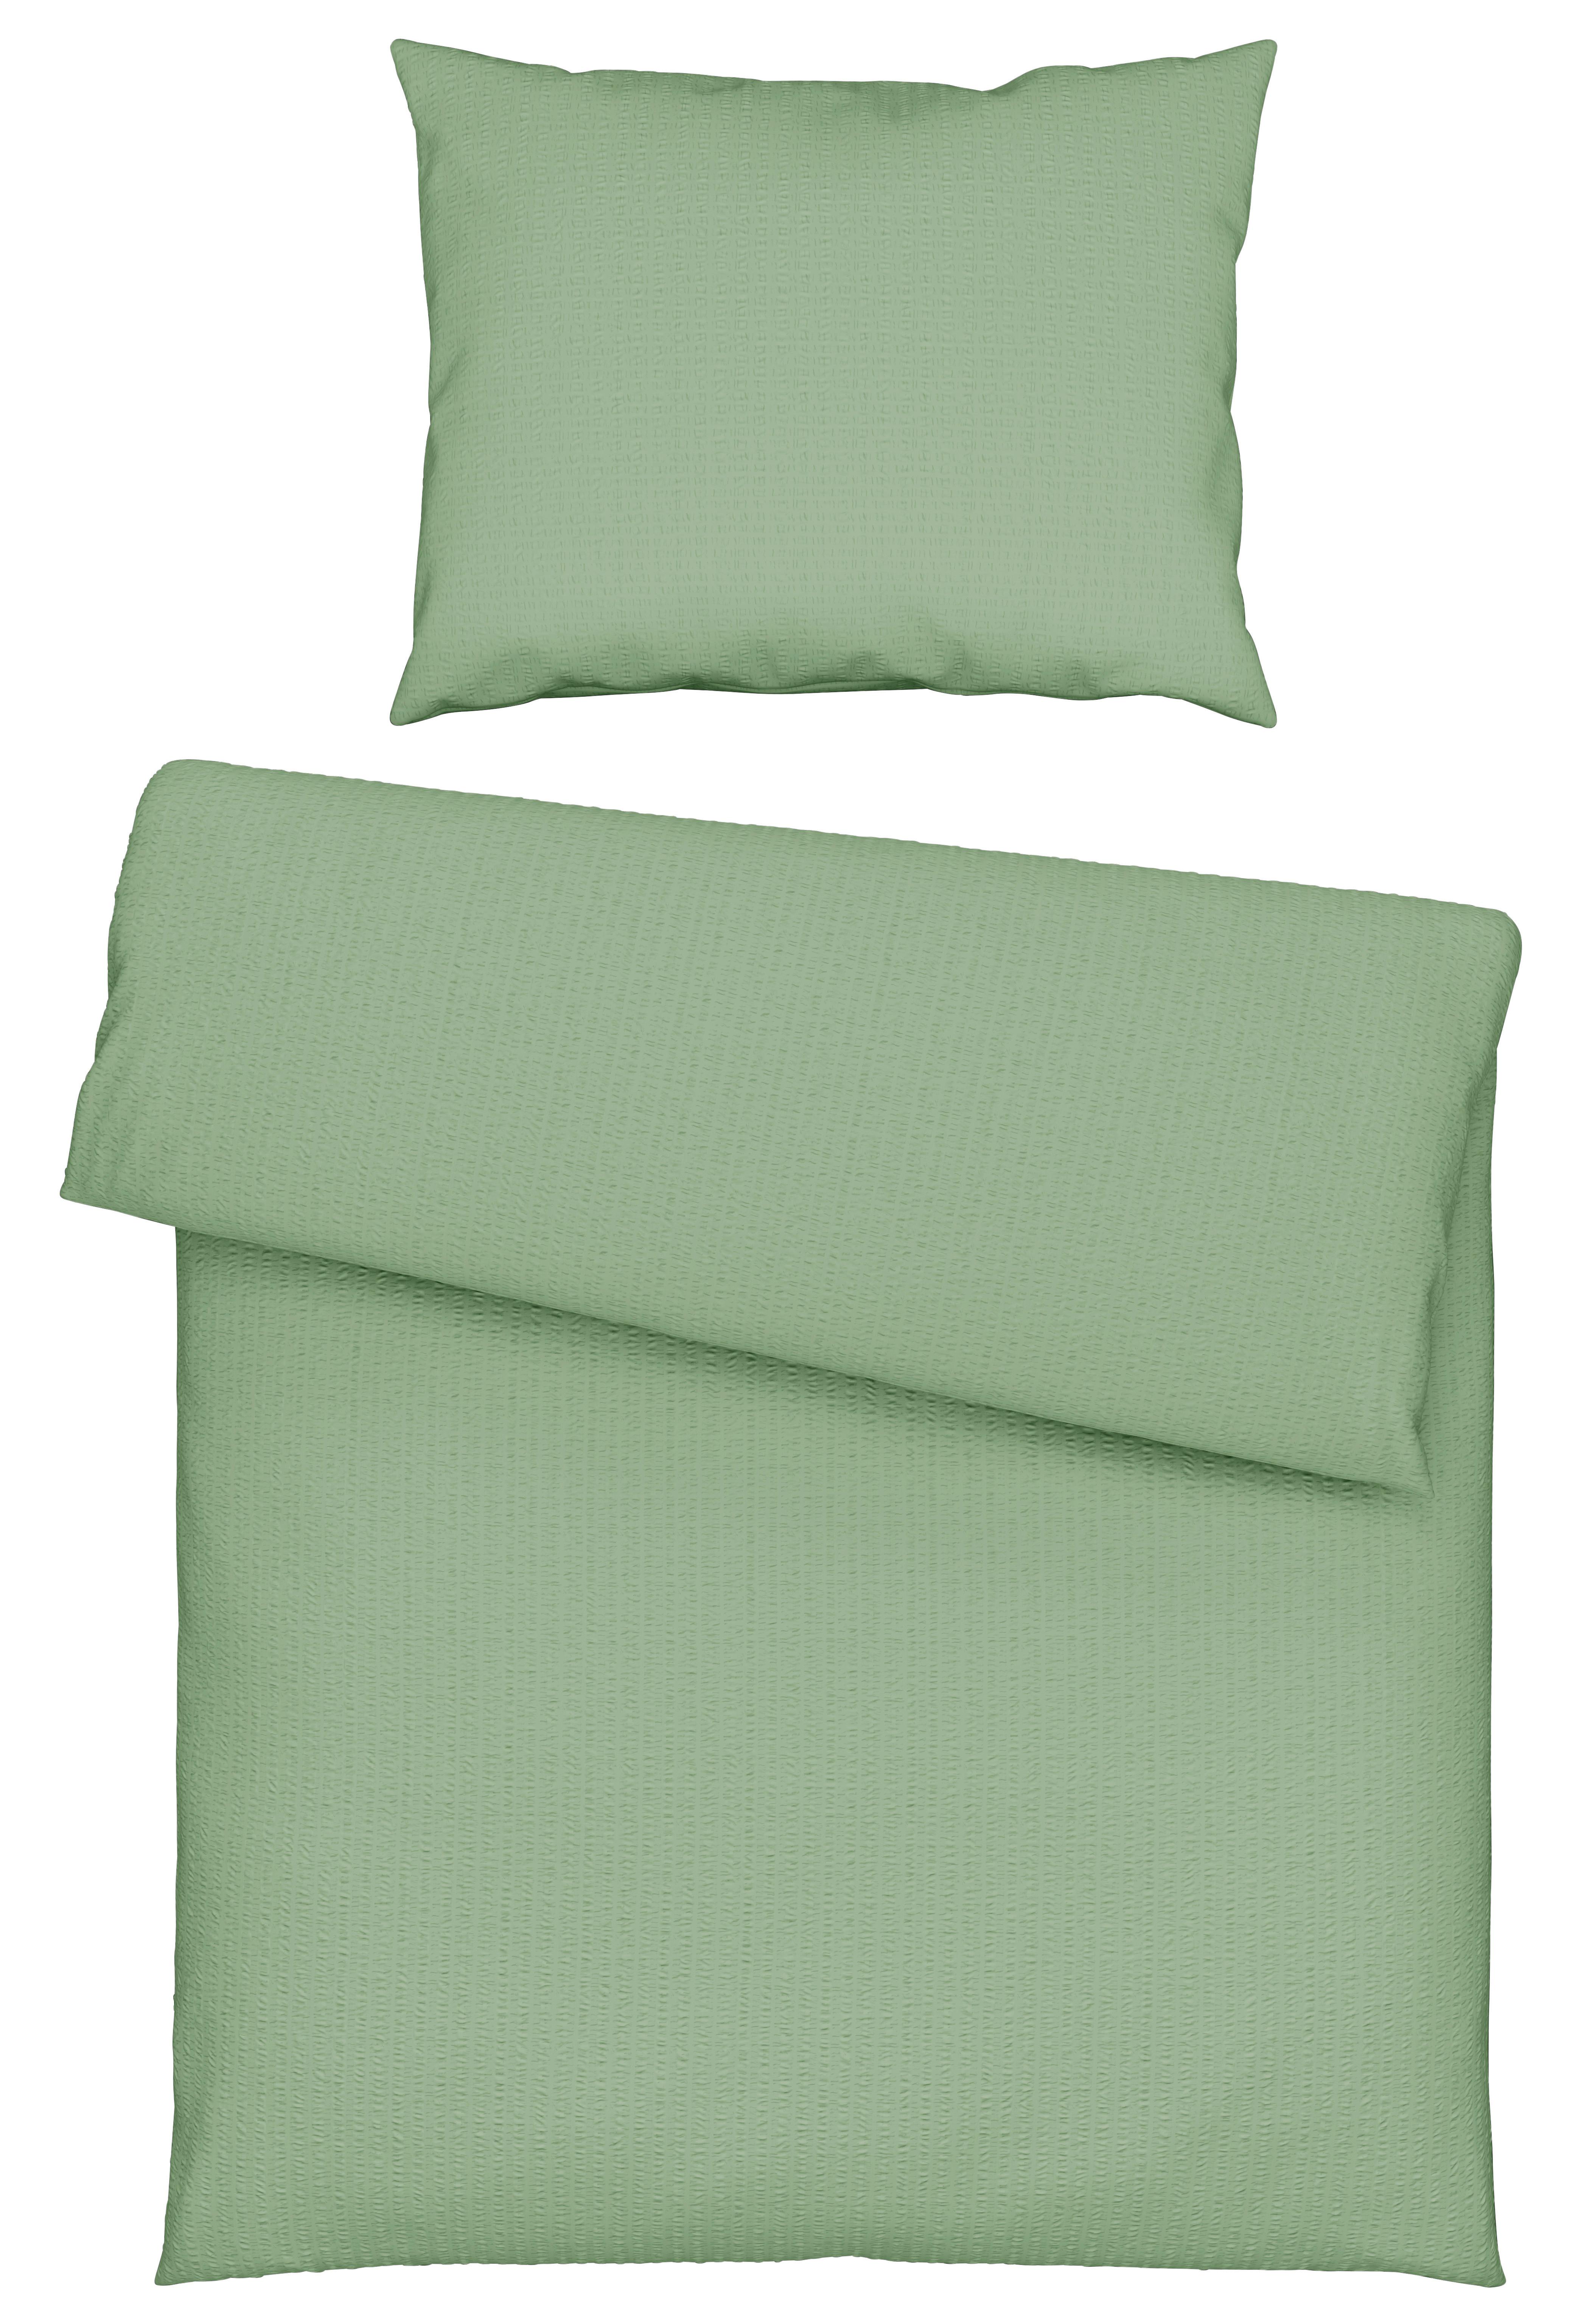 Posteljnina Gisi - zelena, Konvencionalno, tekstil (140/200cm) - Modern Living